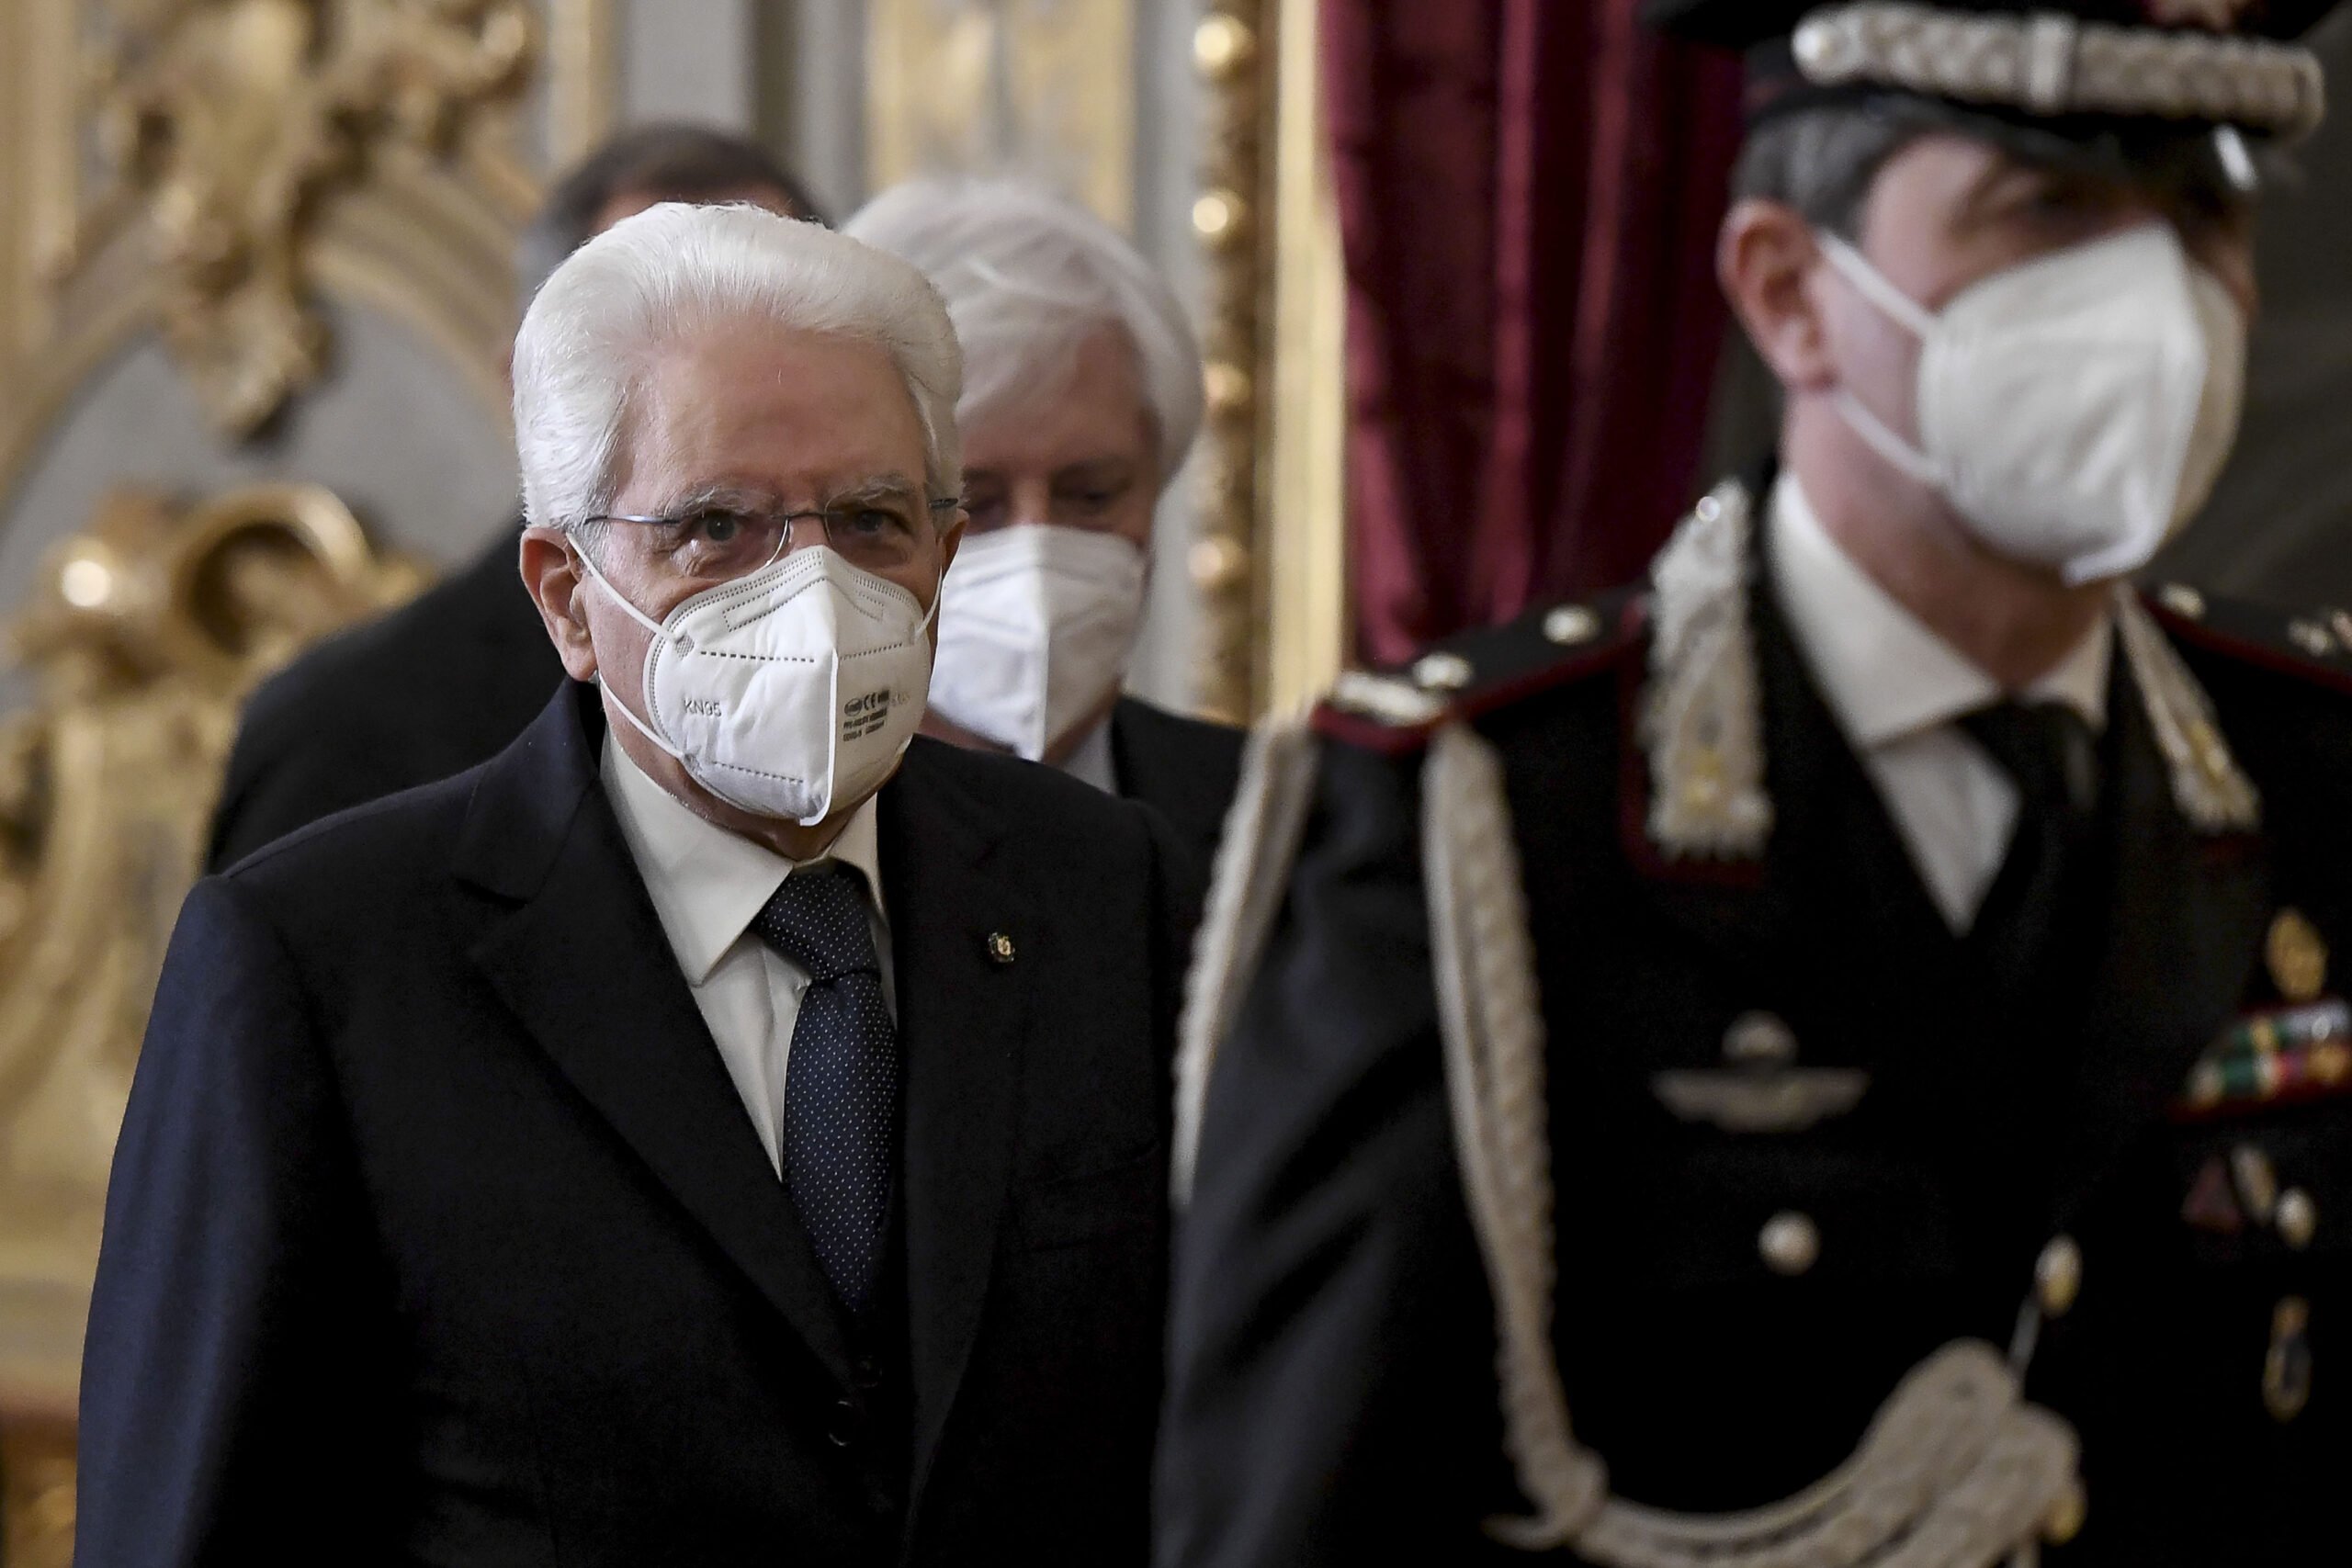 Italia - Ue - crisi - governo